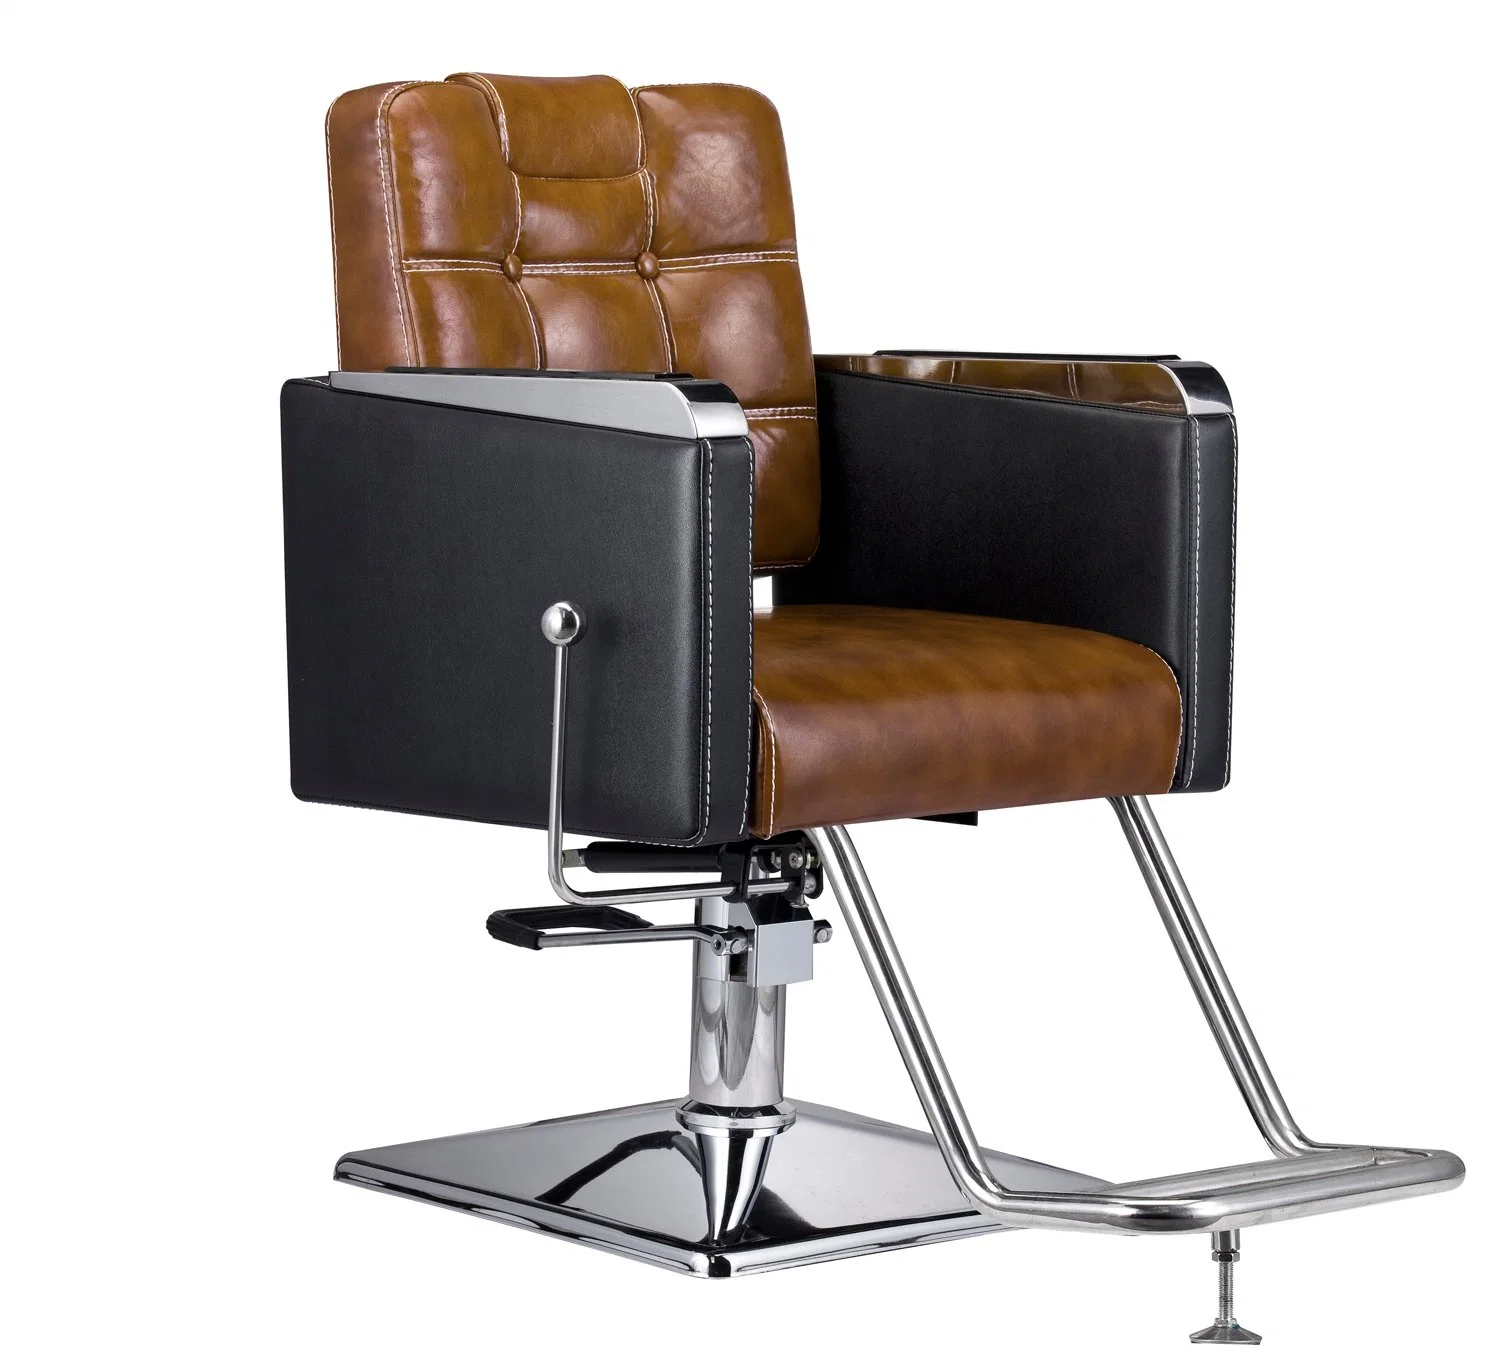 Salon de Coiffure Salon de coiffure en acier inoxydable de meubles de l'accoudoir inclinable Salon hydraulique